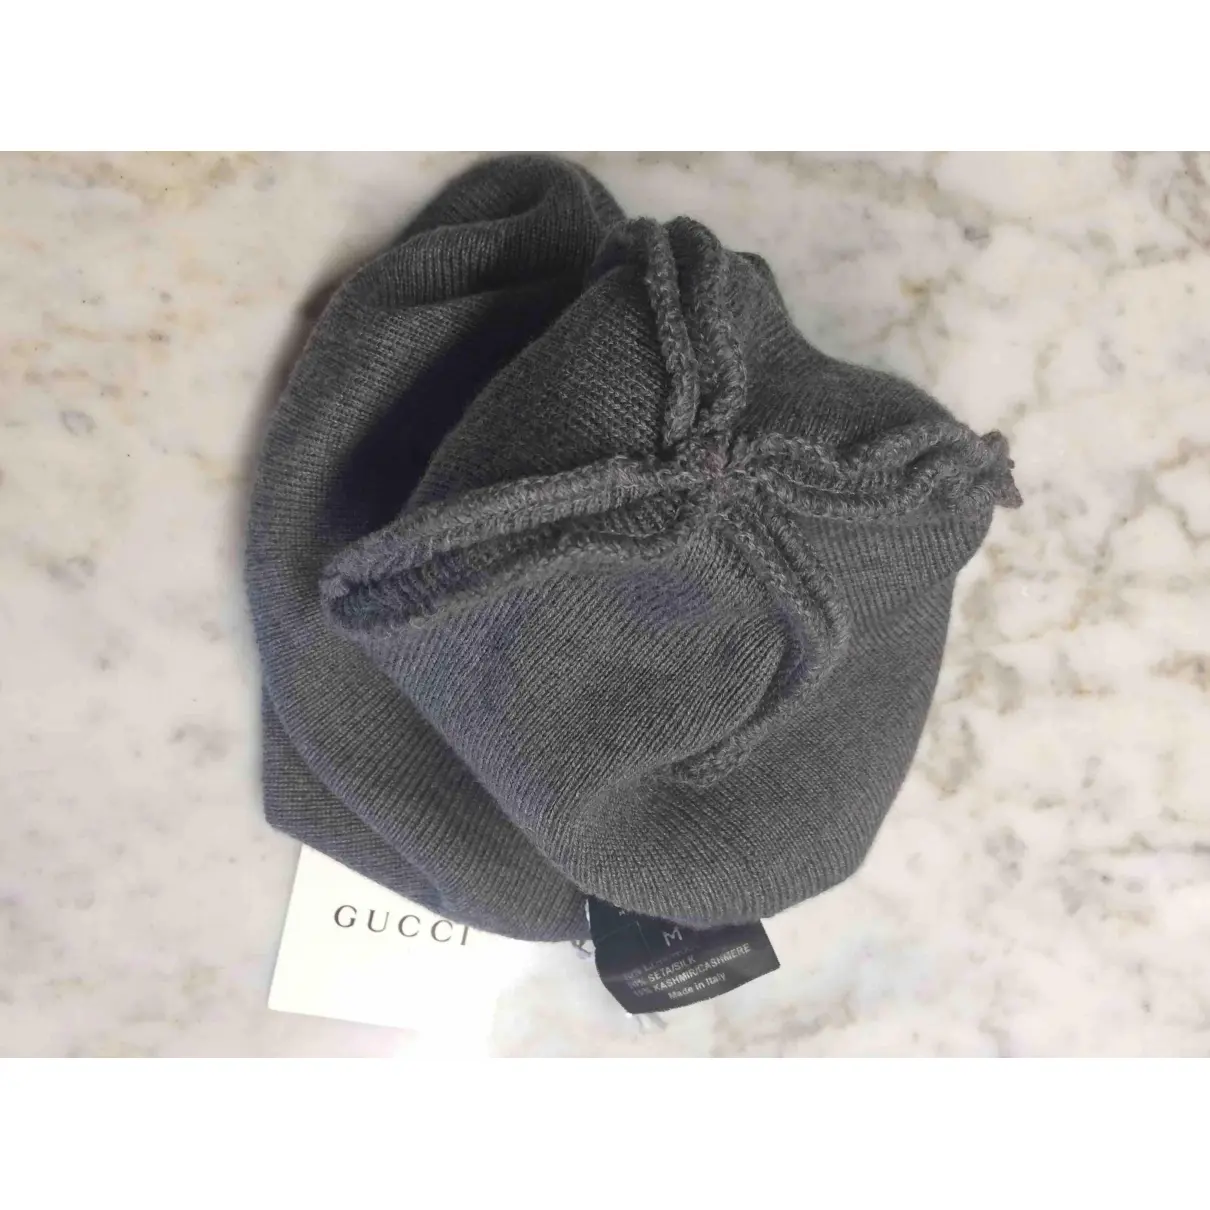 Buy Gucci Wool hat online